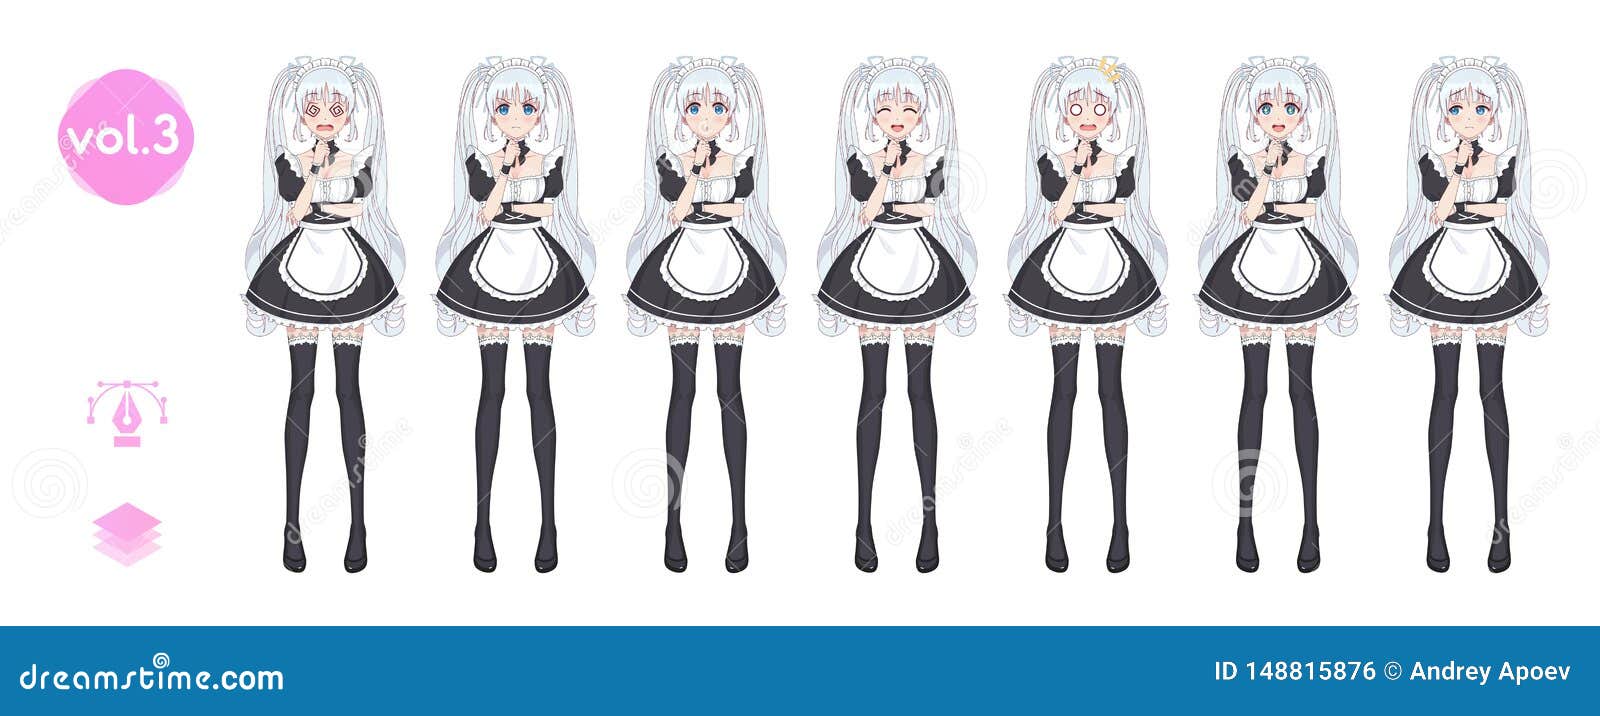 anime manga girl. costume of maid cafe